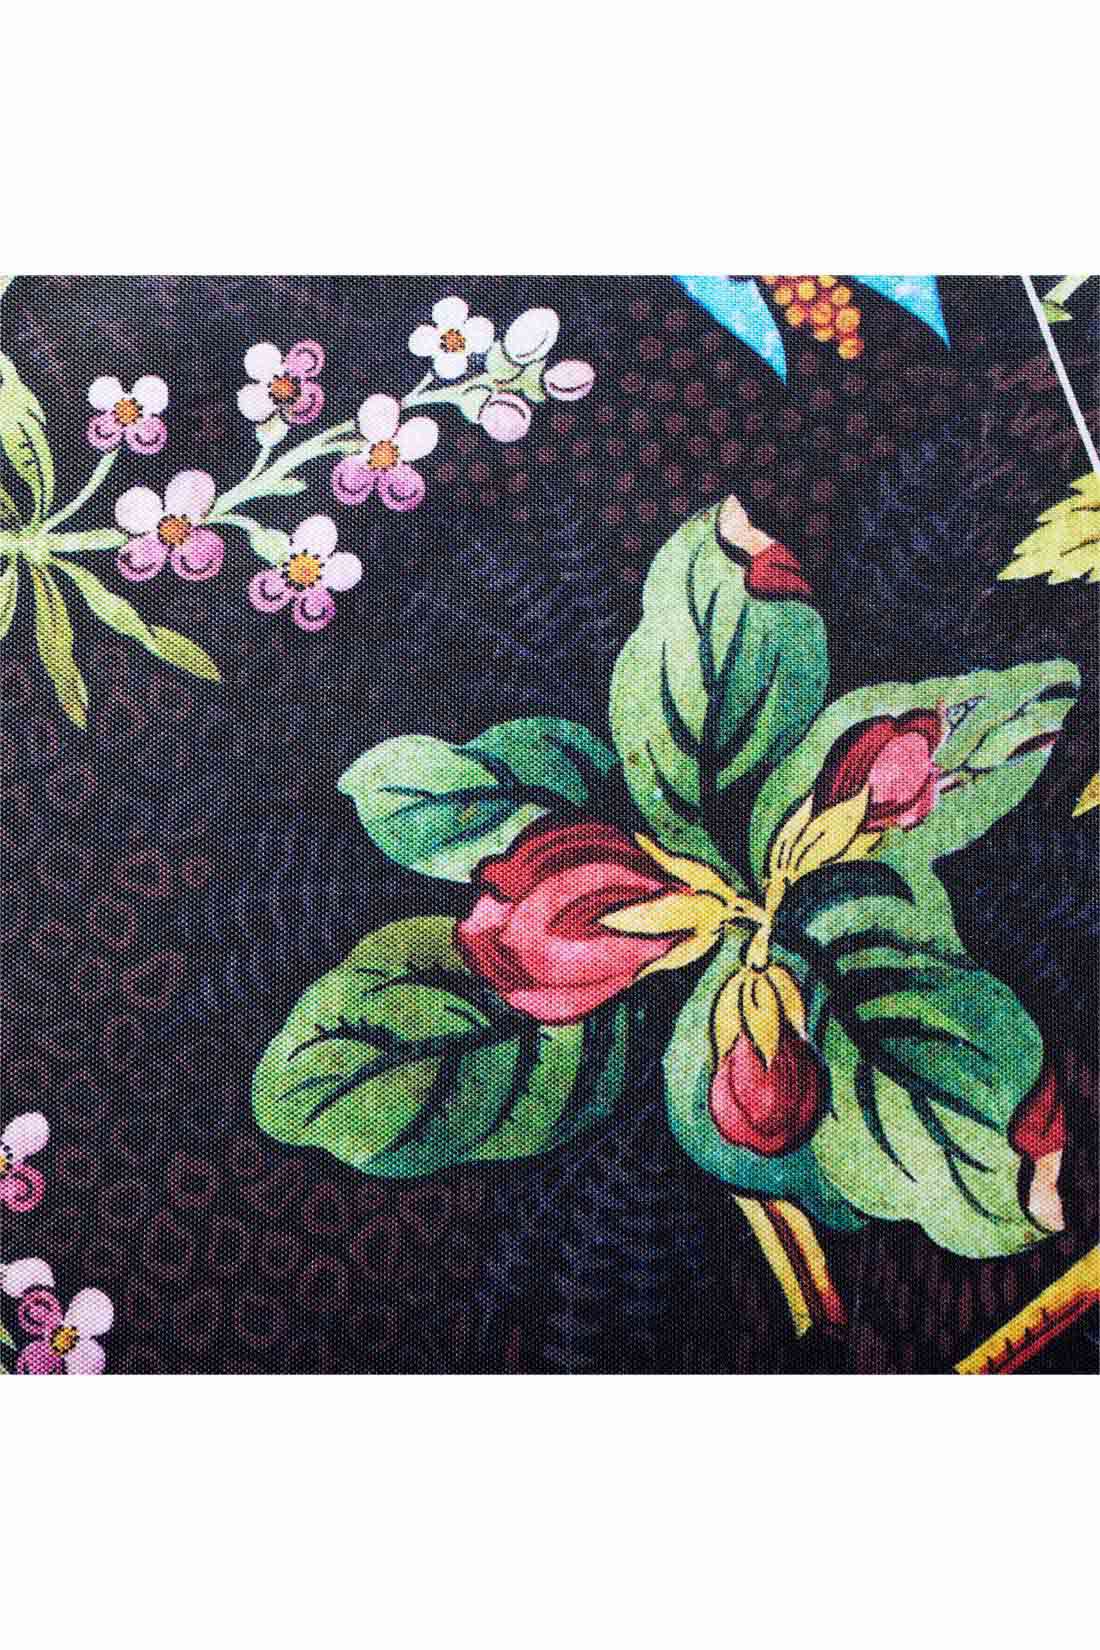 MEDE19F|【MEDE19F】ミュルーズモダン〈「ミュルーズ染織美術館」 アーカイブコレクション〉晴雨兼用折りたたみ傘〈イエロー〉|シックに描かれた花や果実が、古い植物図鑑のよう